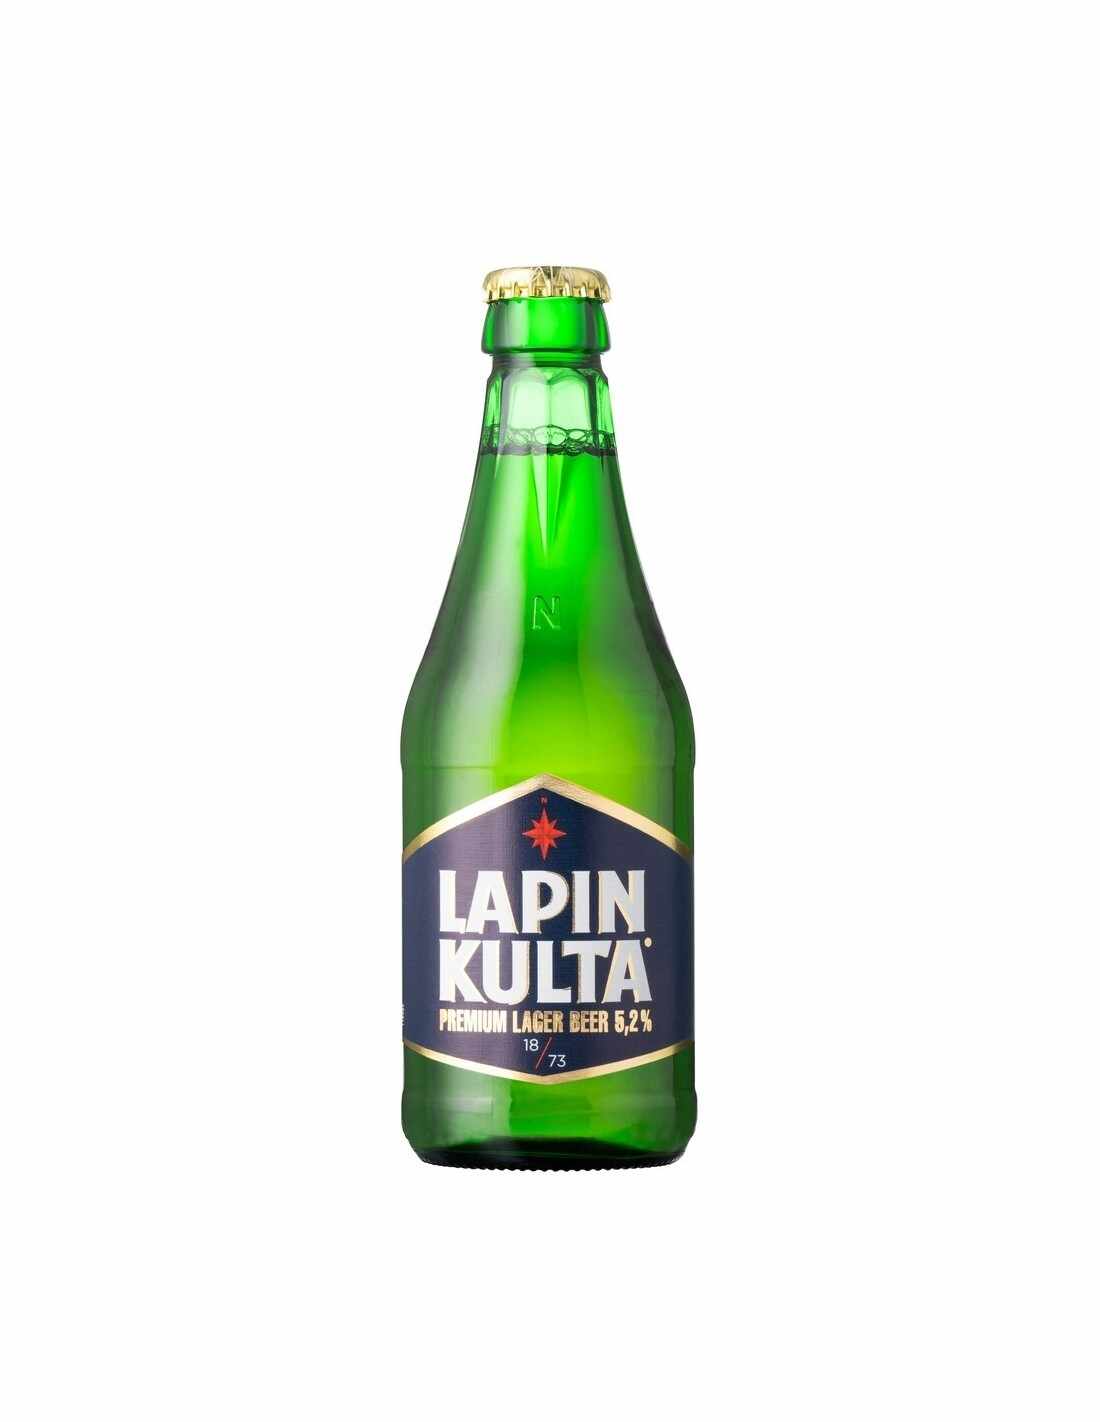 Bere blonda lager, Lapin Kulta Premium, 5.2% alc., 0.33L, Finlanda